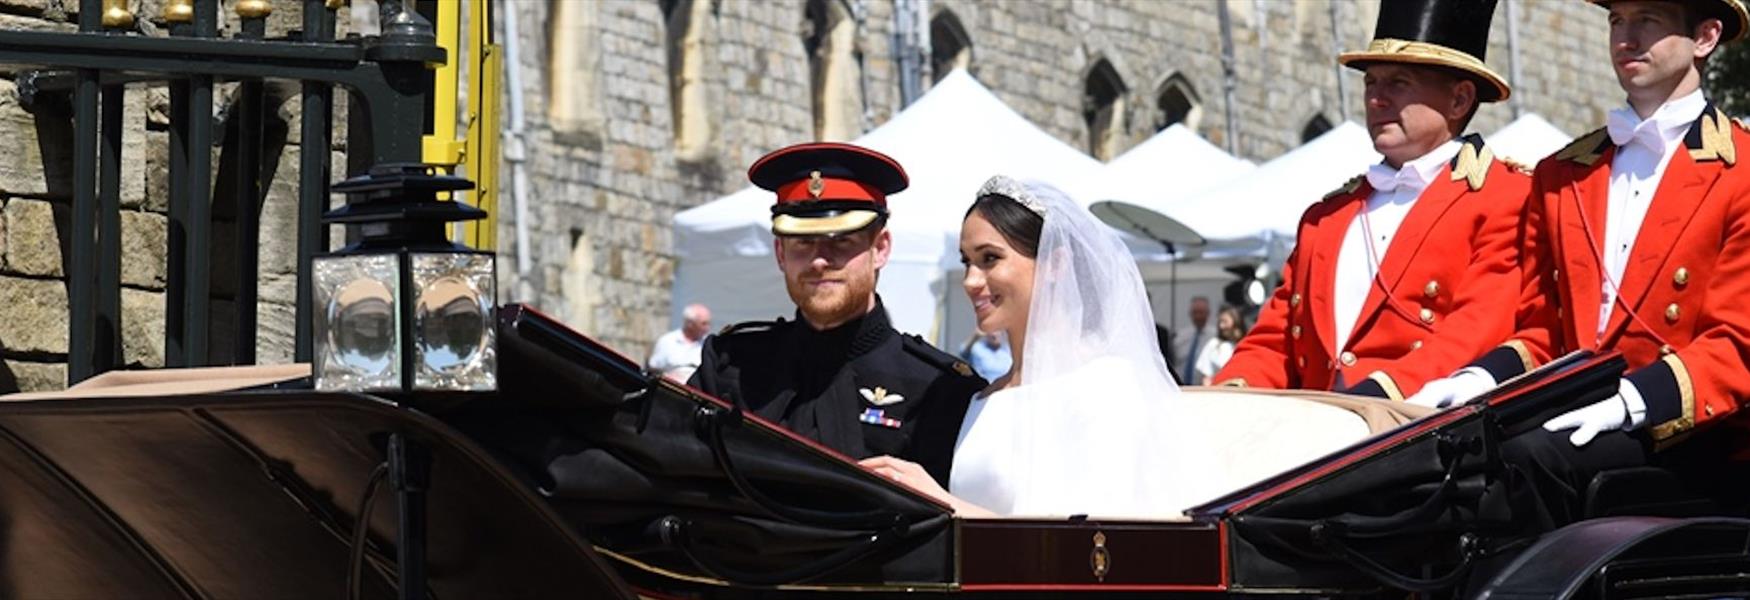 Royal Wedding in Windsor